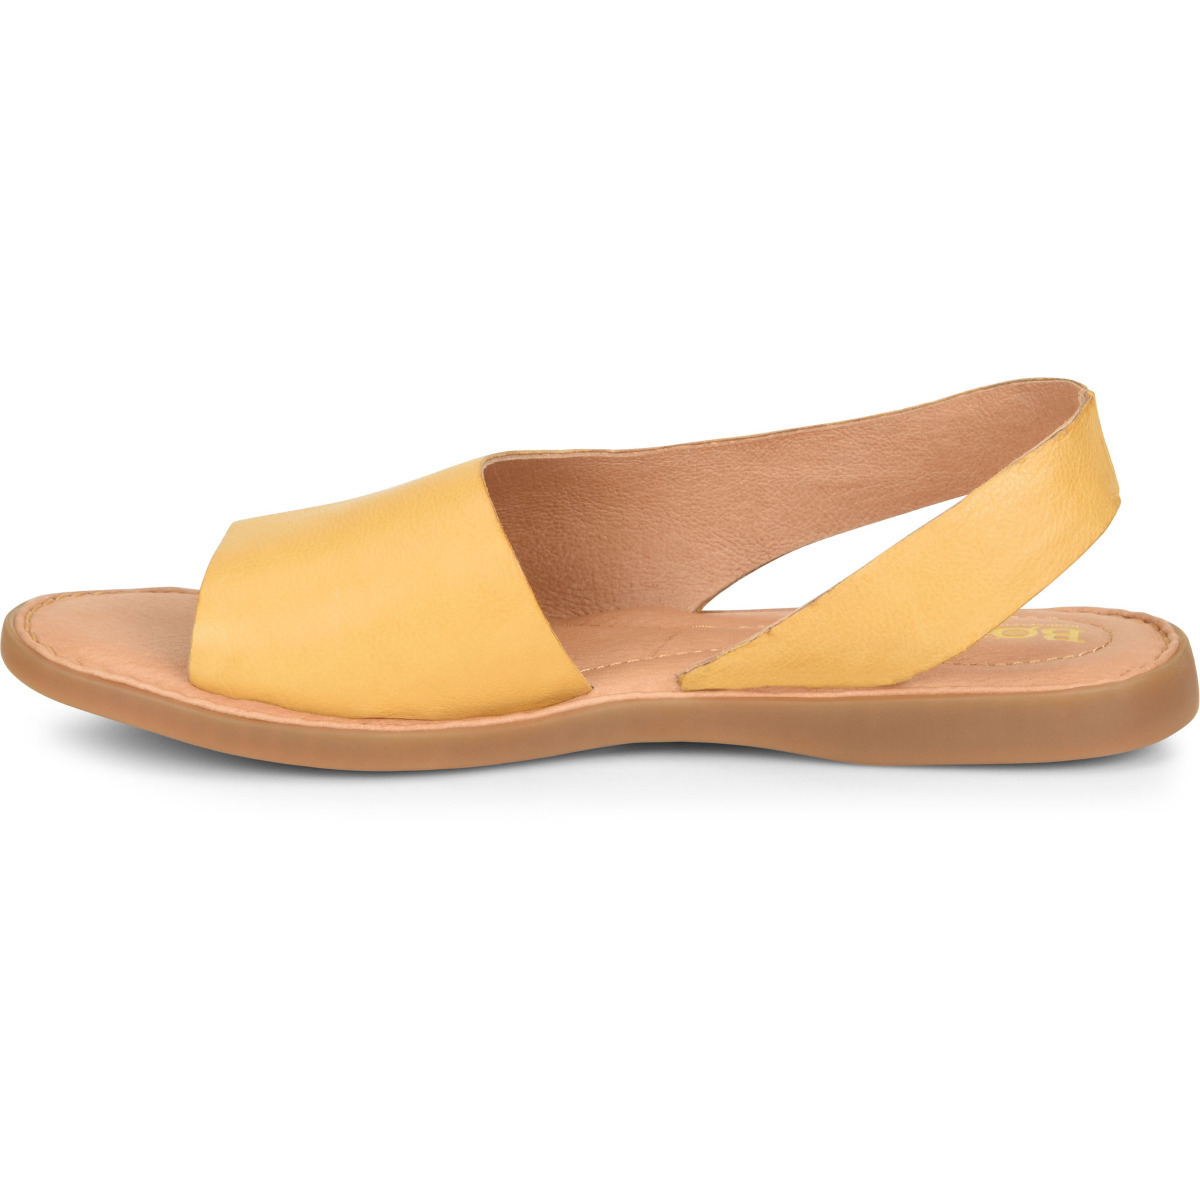 Born Women's Inlet Sandal Orca (Yellow) - BR0002292 YELLOW - YELLOW, 9